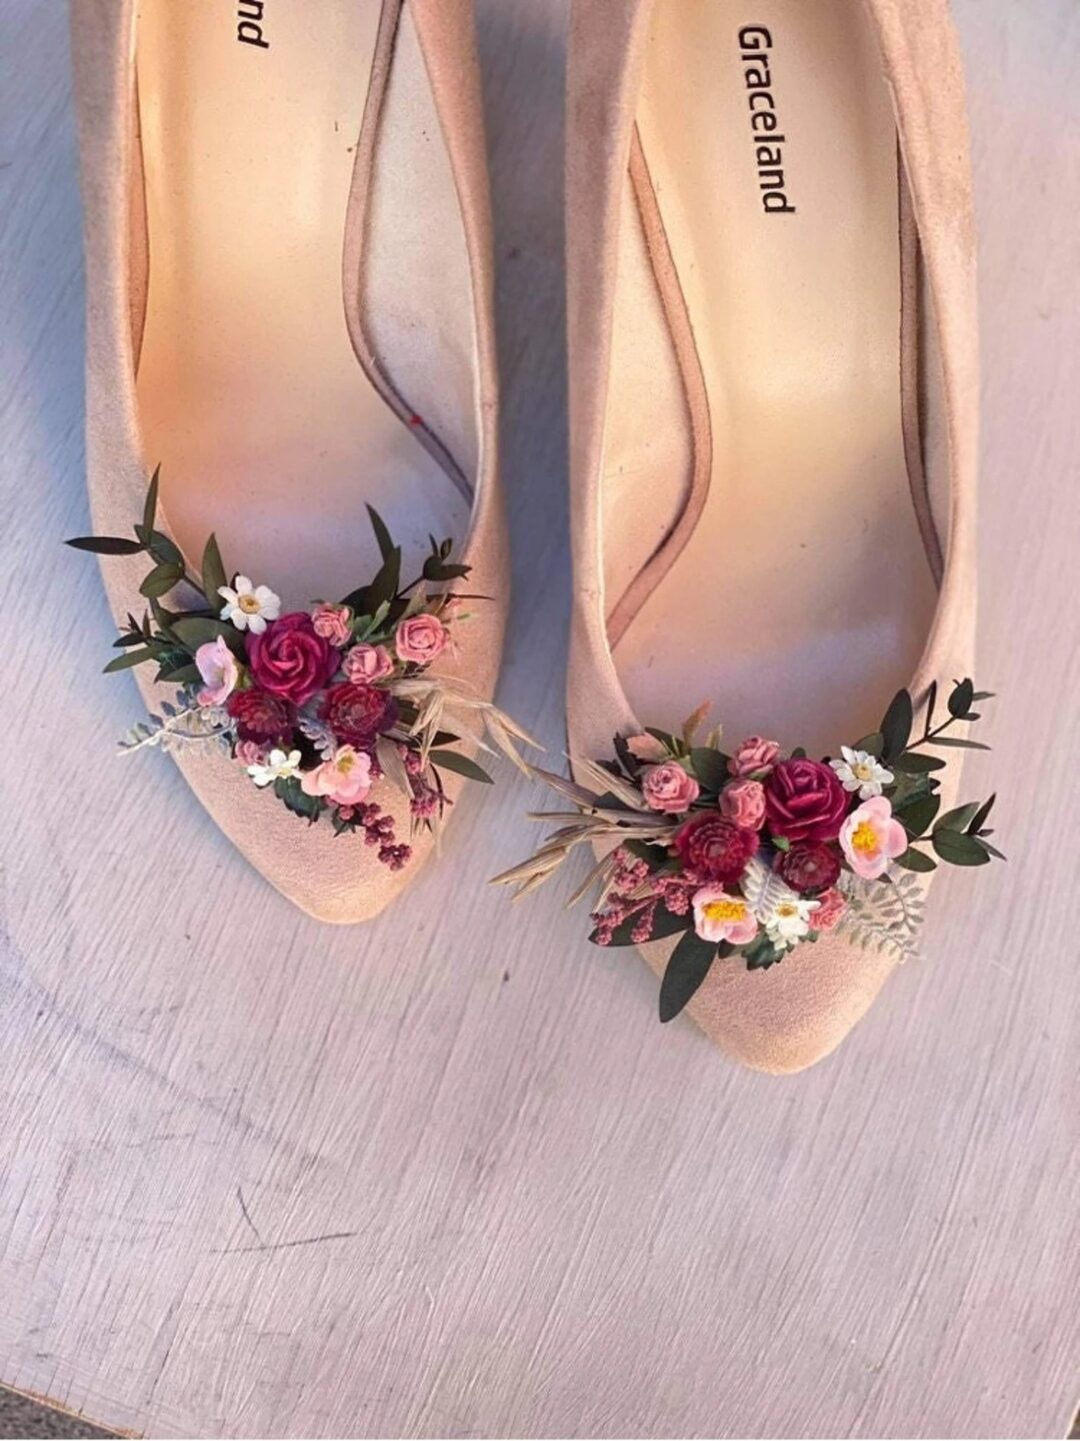 Christian Louboutin Wedding Shoes